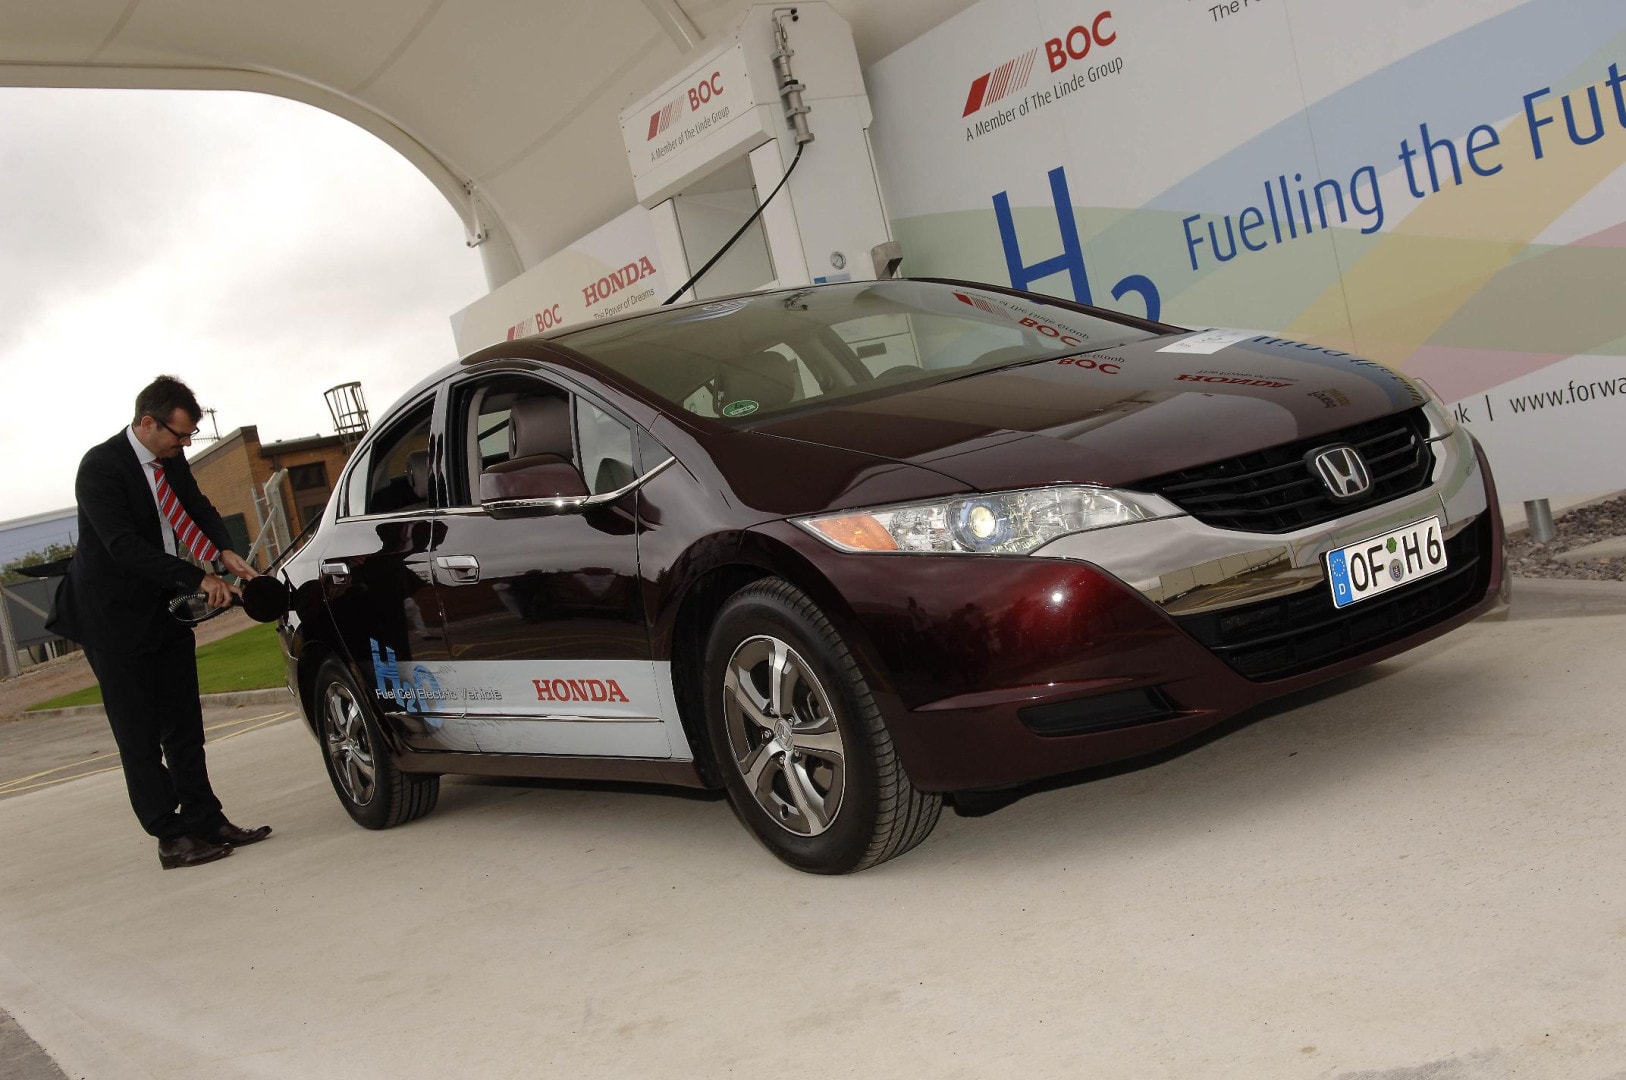 Honda opens a hydrogen refueling station